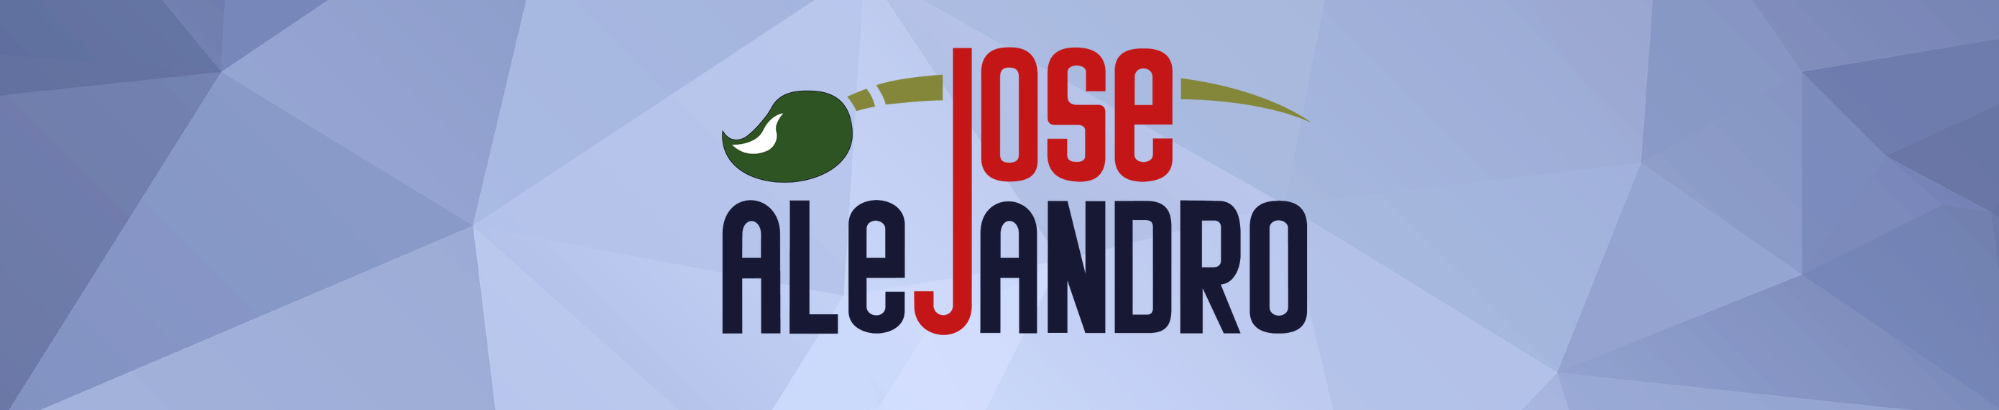 Jose Alejandro 的个人资料横幅